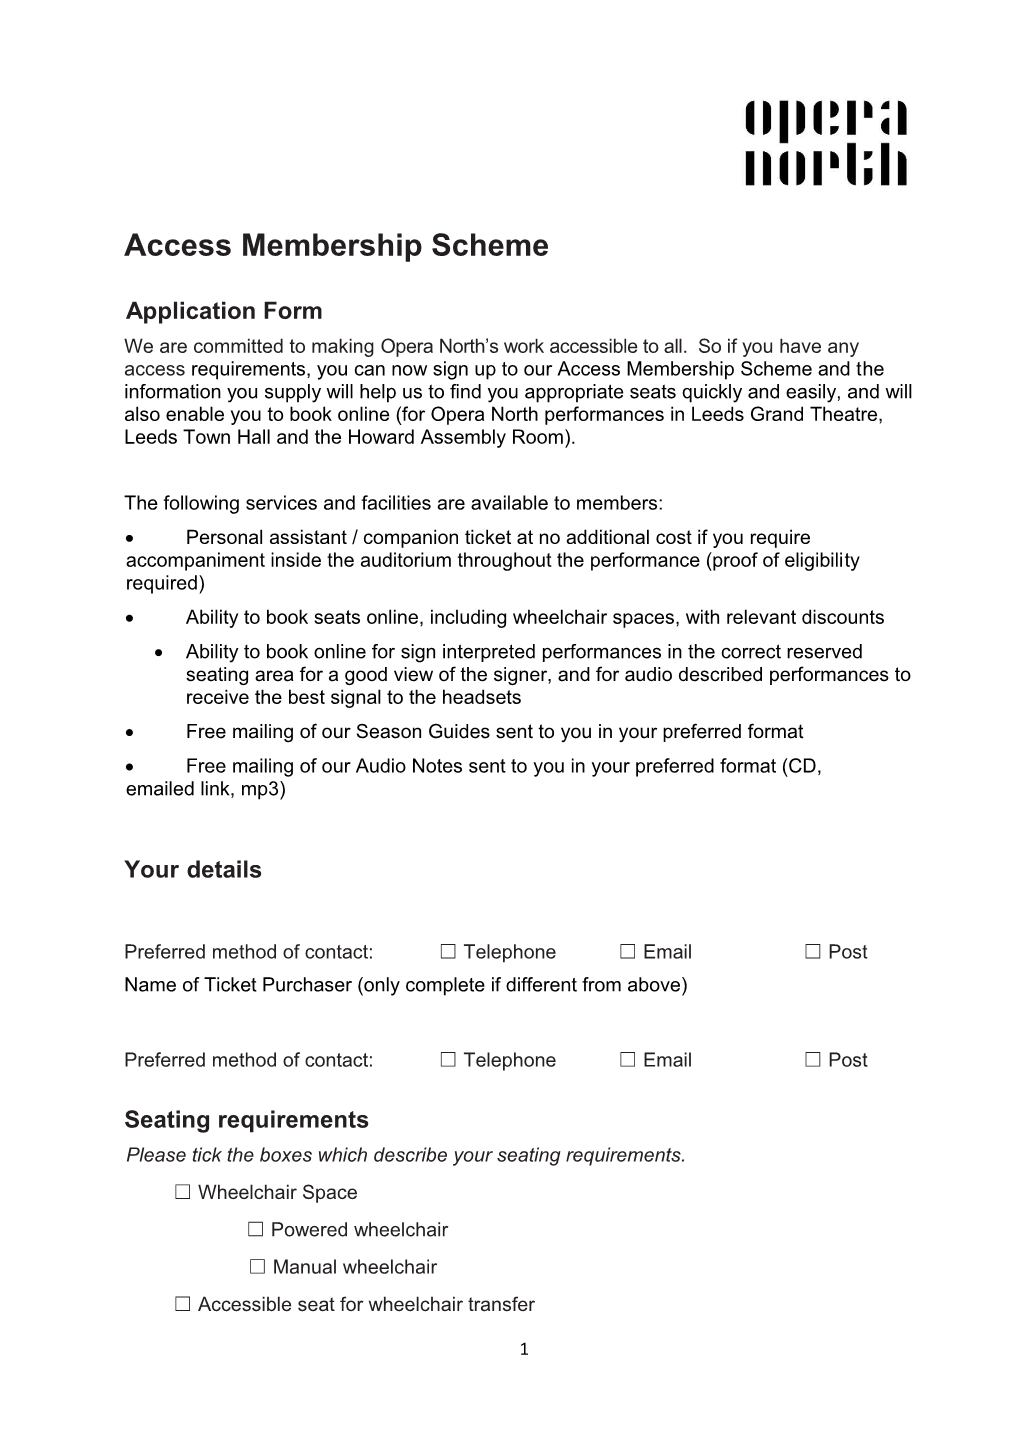 Accessmembership Scheme